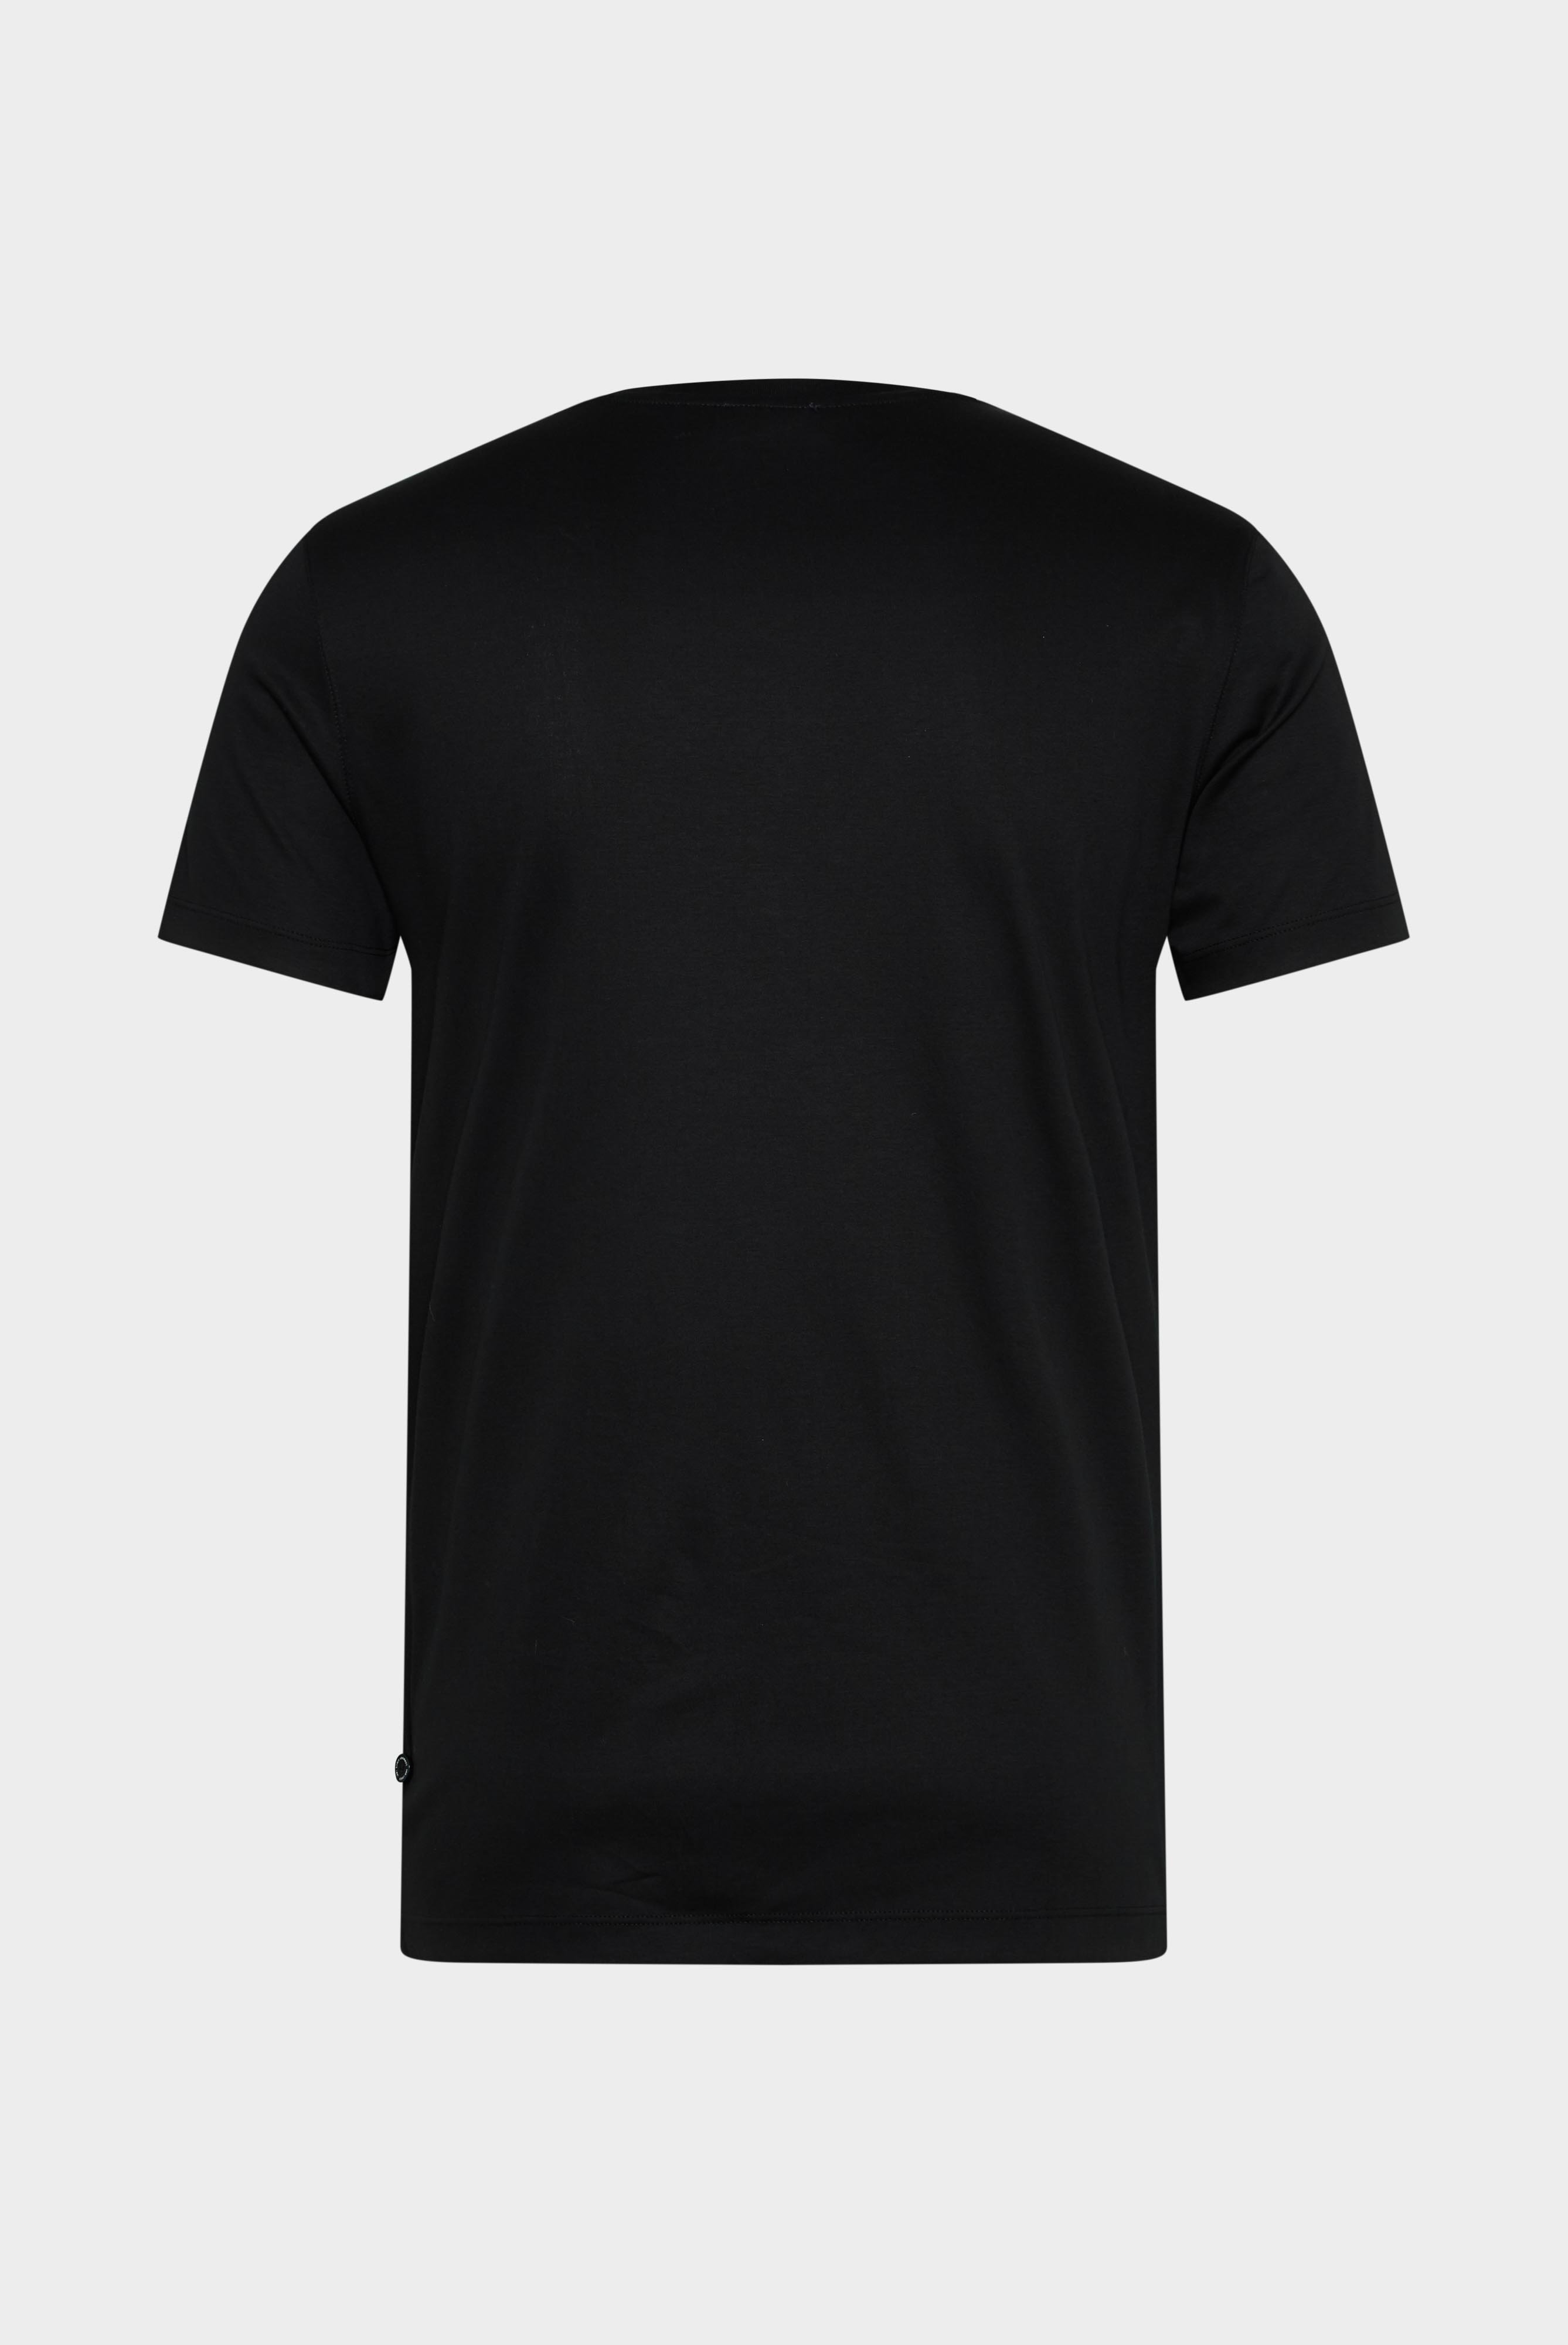 T-Shirts+Swiss Cotton Jersey V-Neck T-Shirt+20.1715.UX.180031.099.M